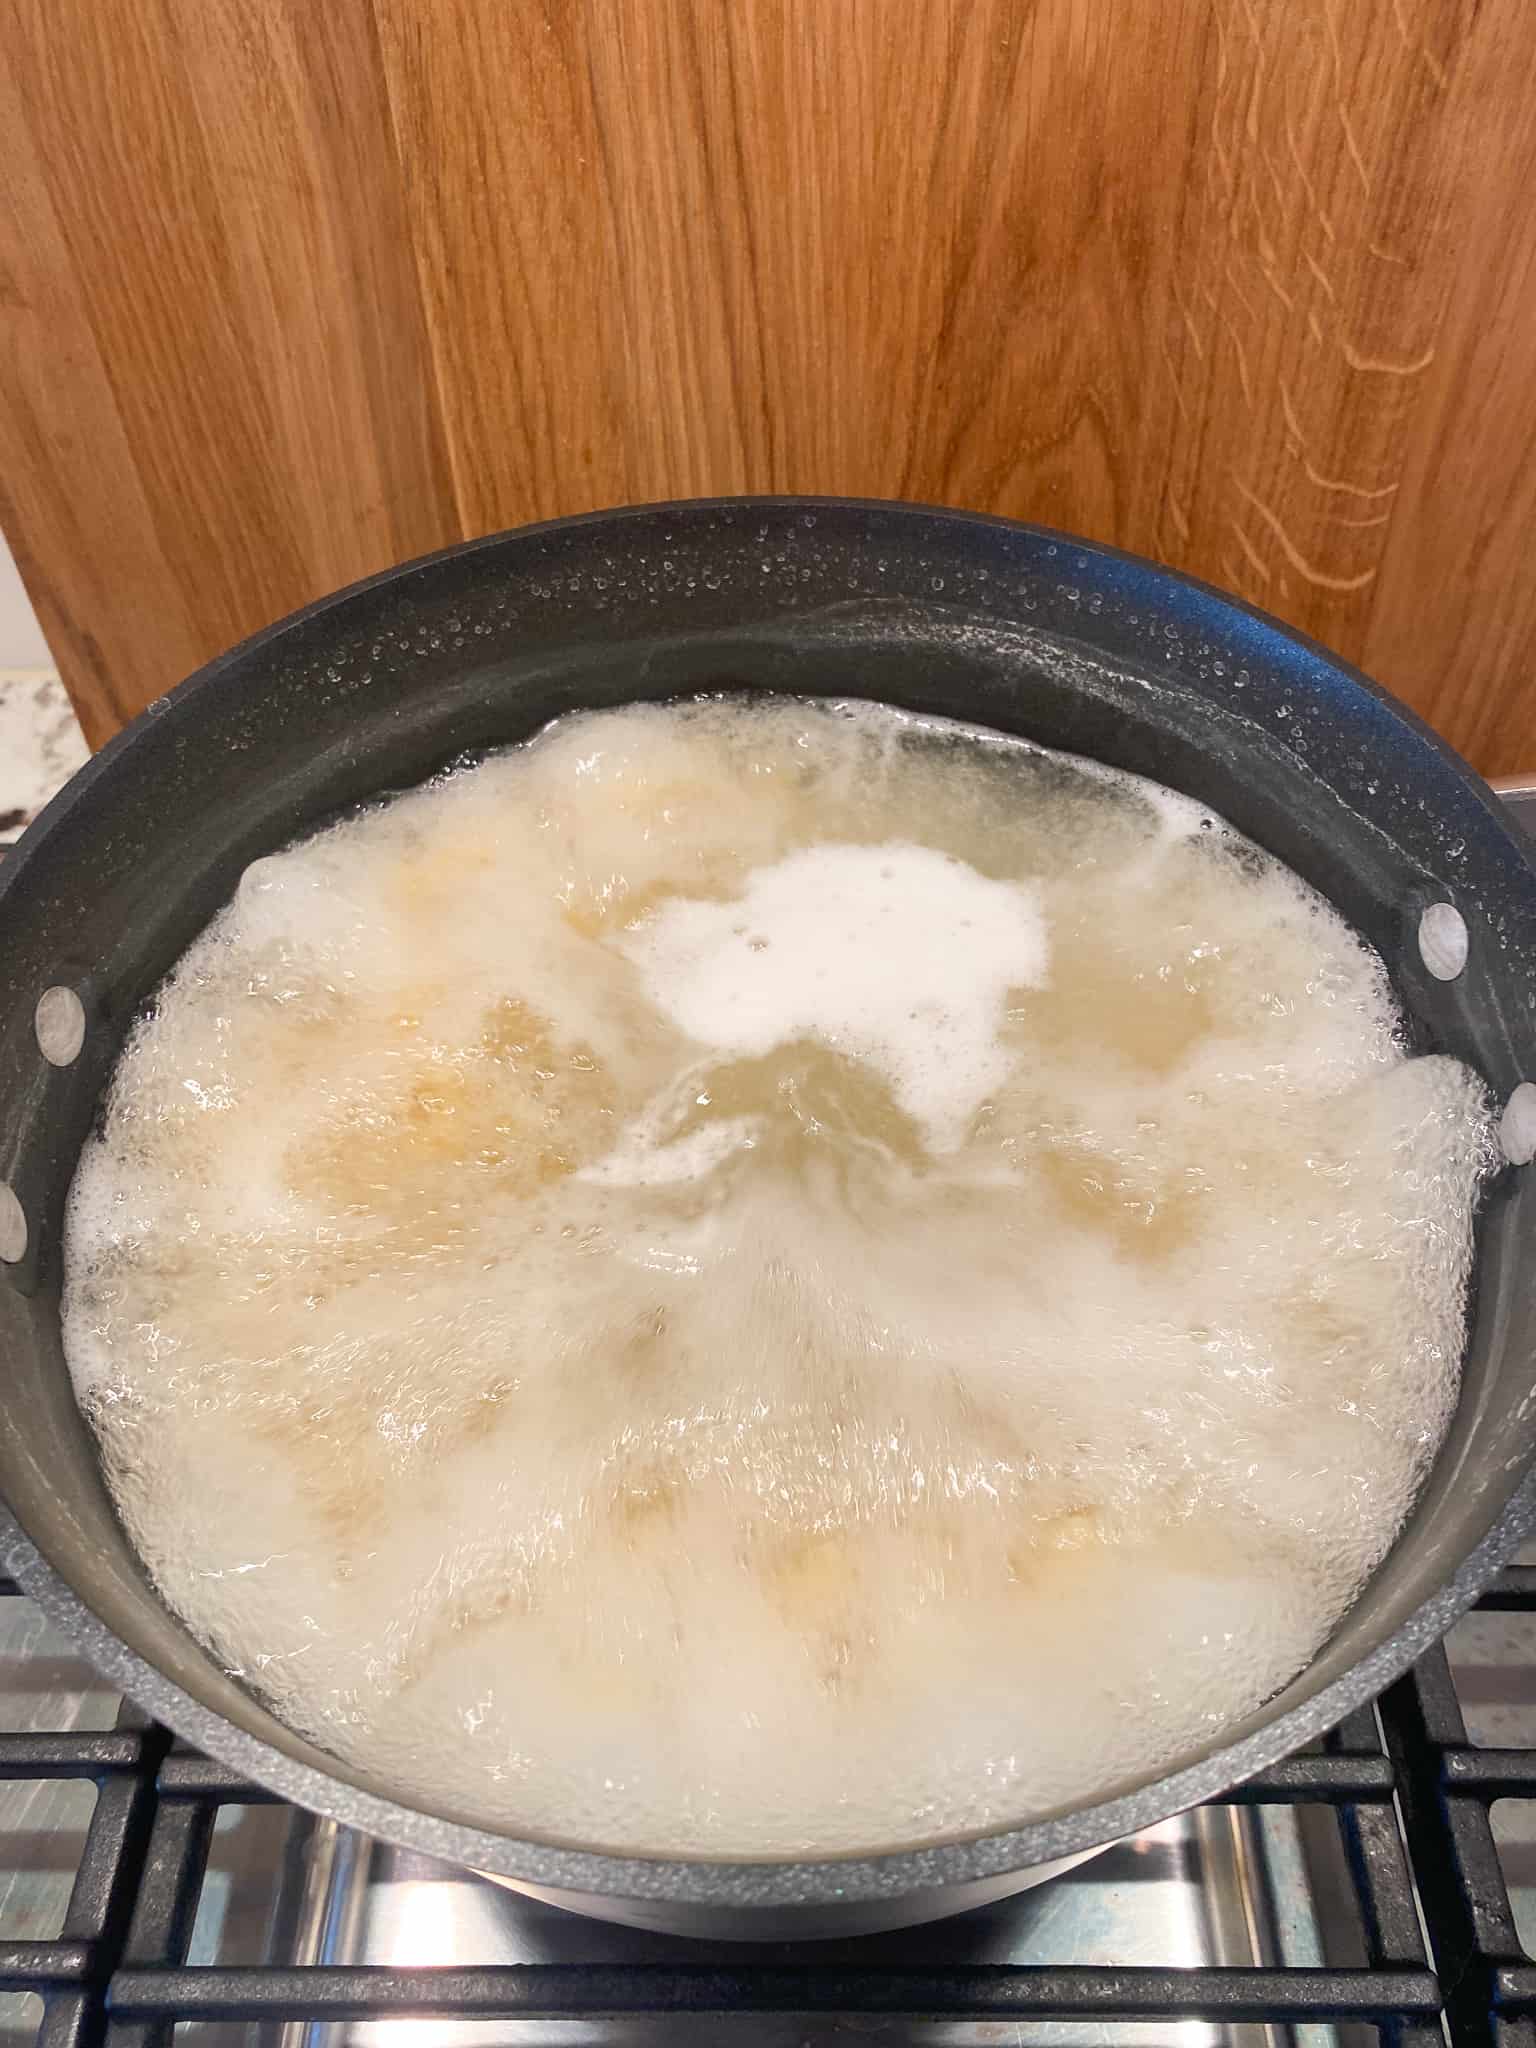 boil pasta in heavily salted water until al dente